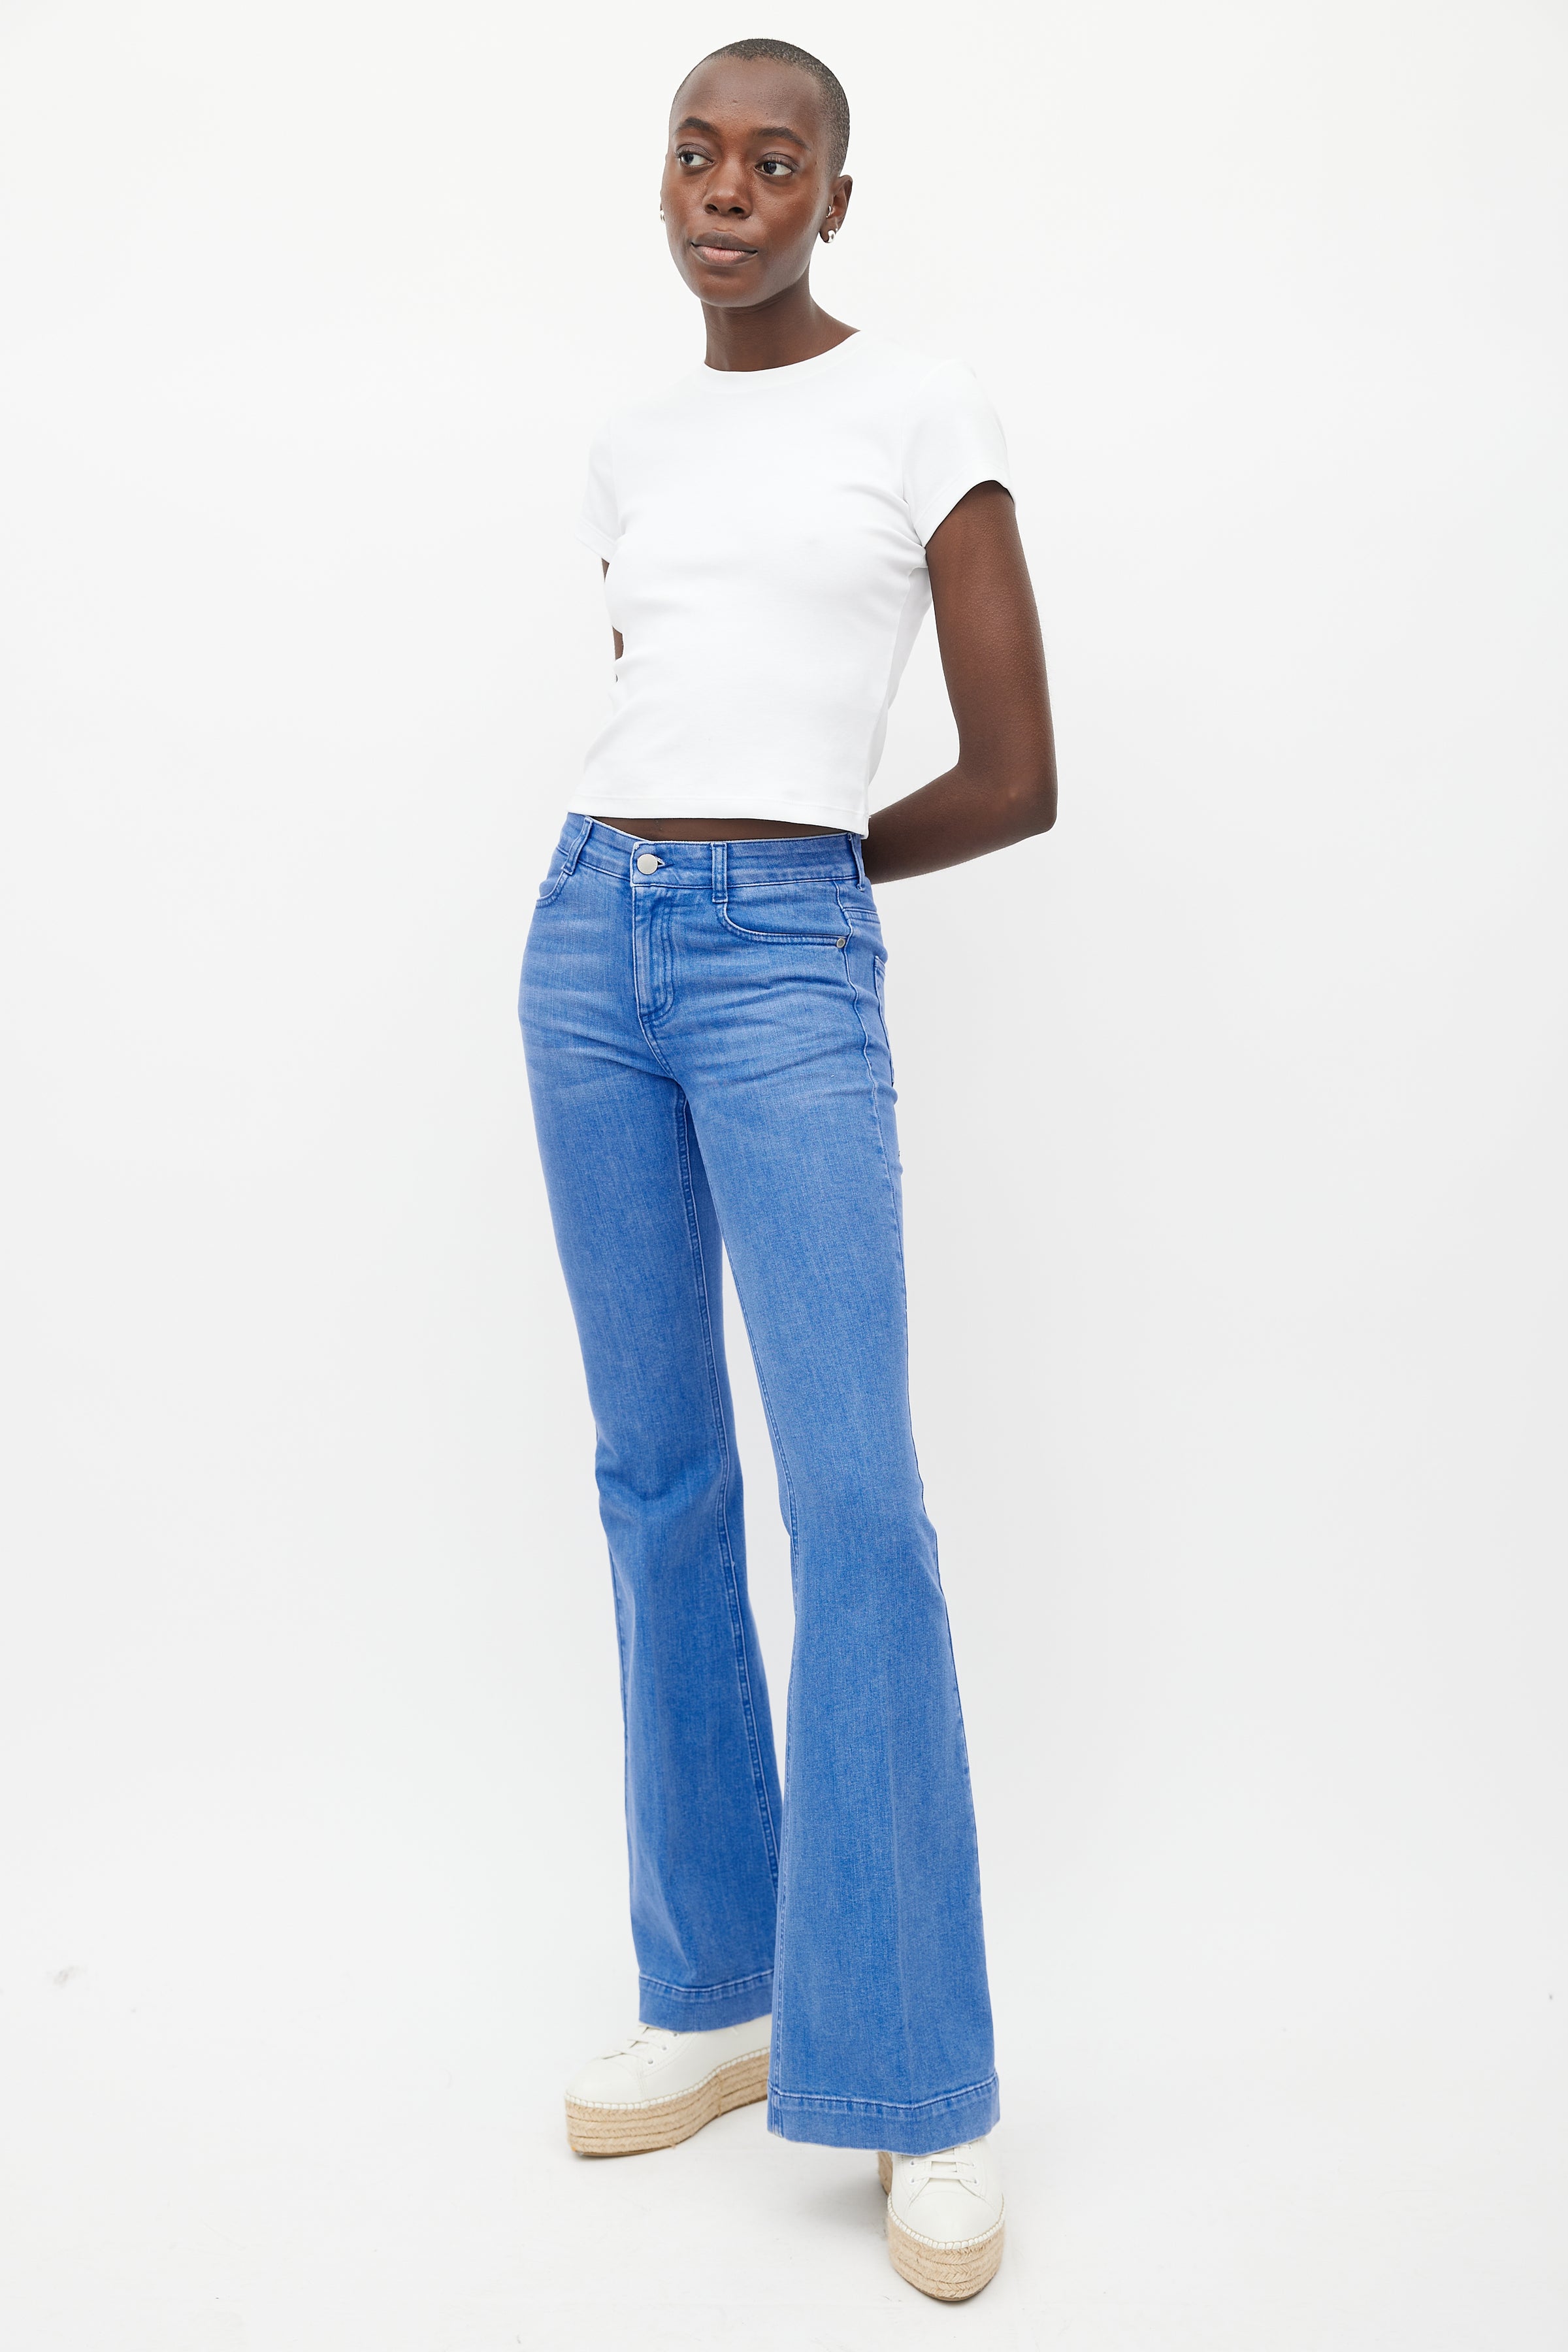 Stella McCartney Stella Mccartney Denim Jeans - Stylemyle